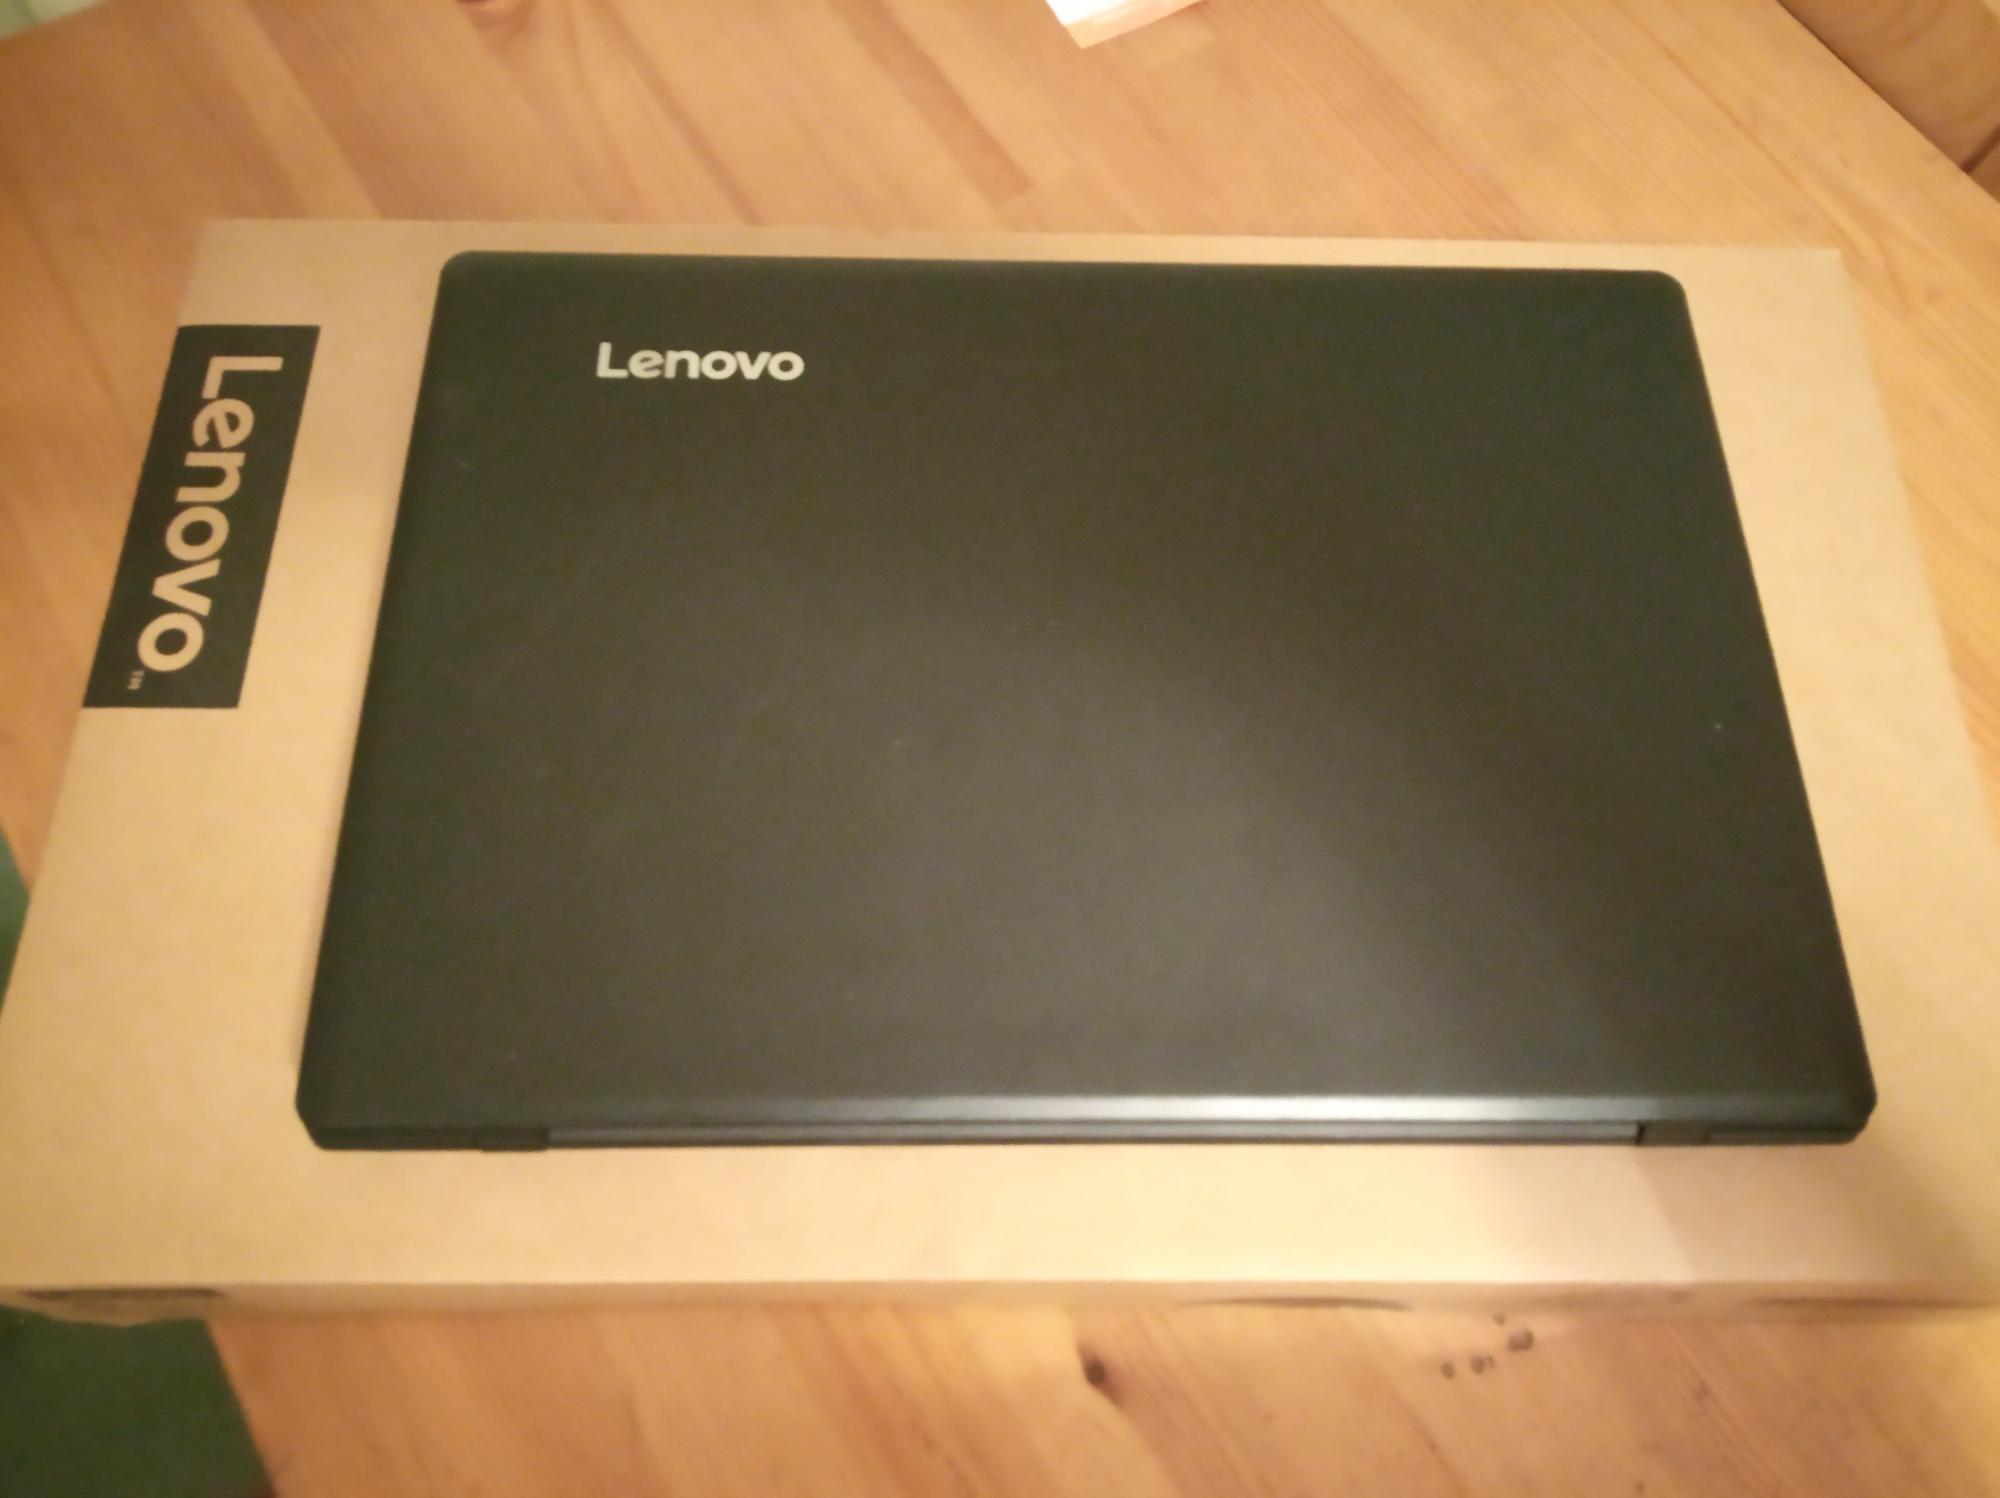 110 15acl ноутбук. Lenovo 15acl. Оптический привод Lenovo 110-15acl.